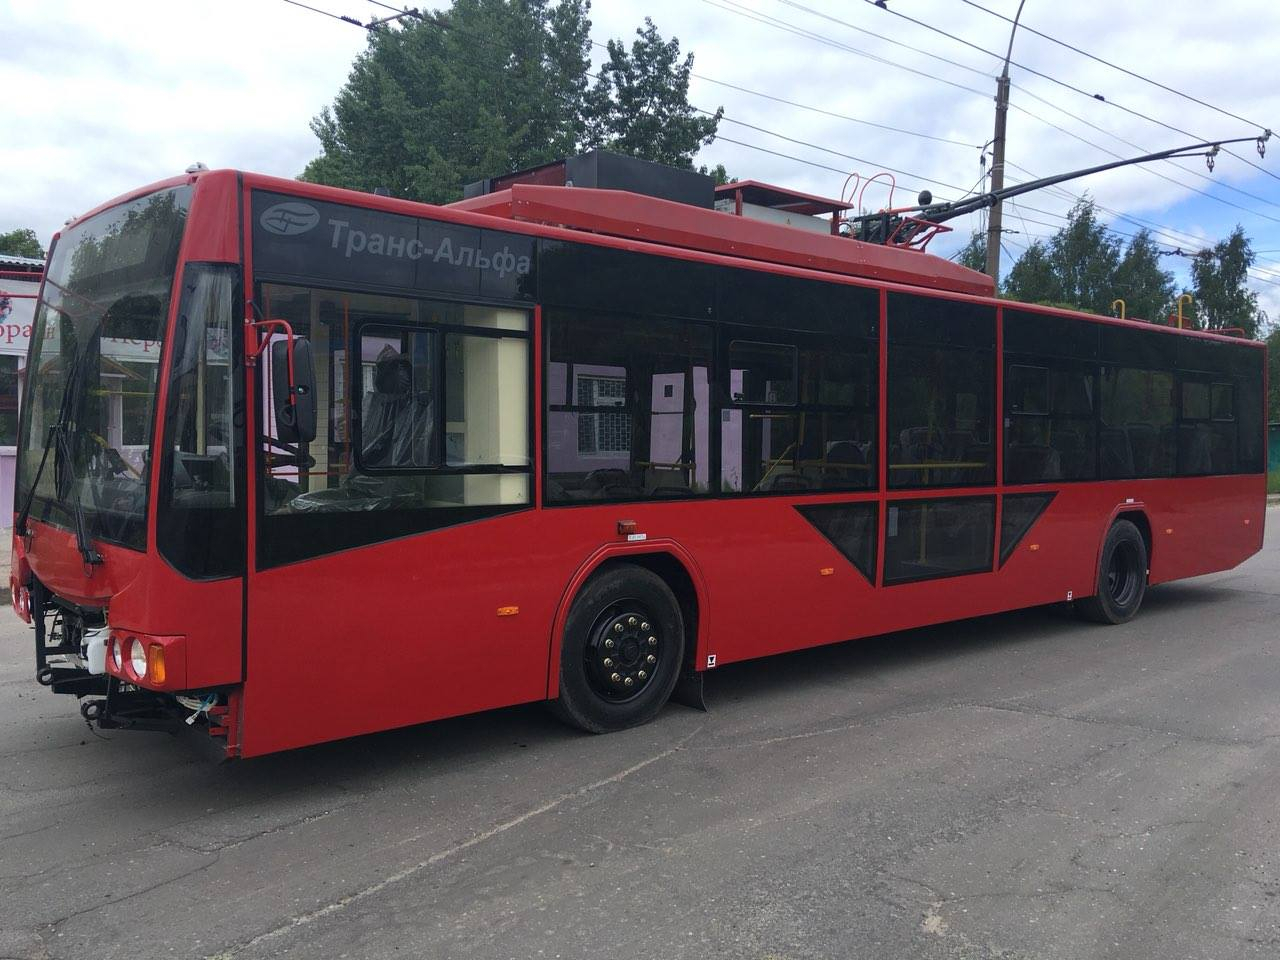 Весь транспорт Ярославля покраснел: теперь троллейбусы и трамваи. Видео